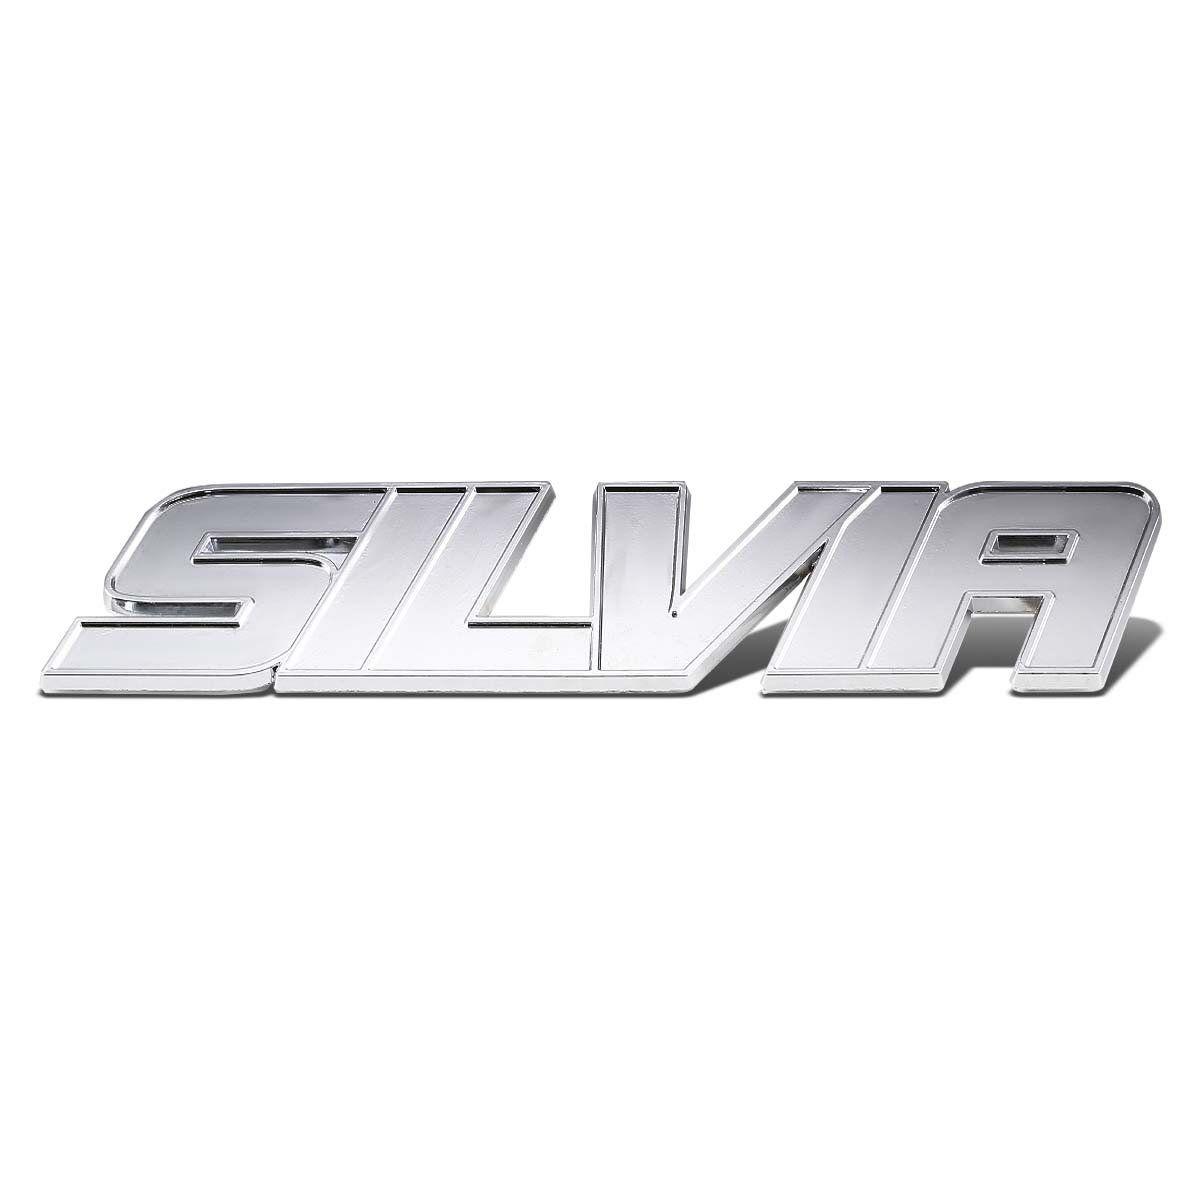 Silvia Logo - Amazon.com: DNA EM-L-SILVIA-SL - Silver